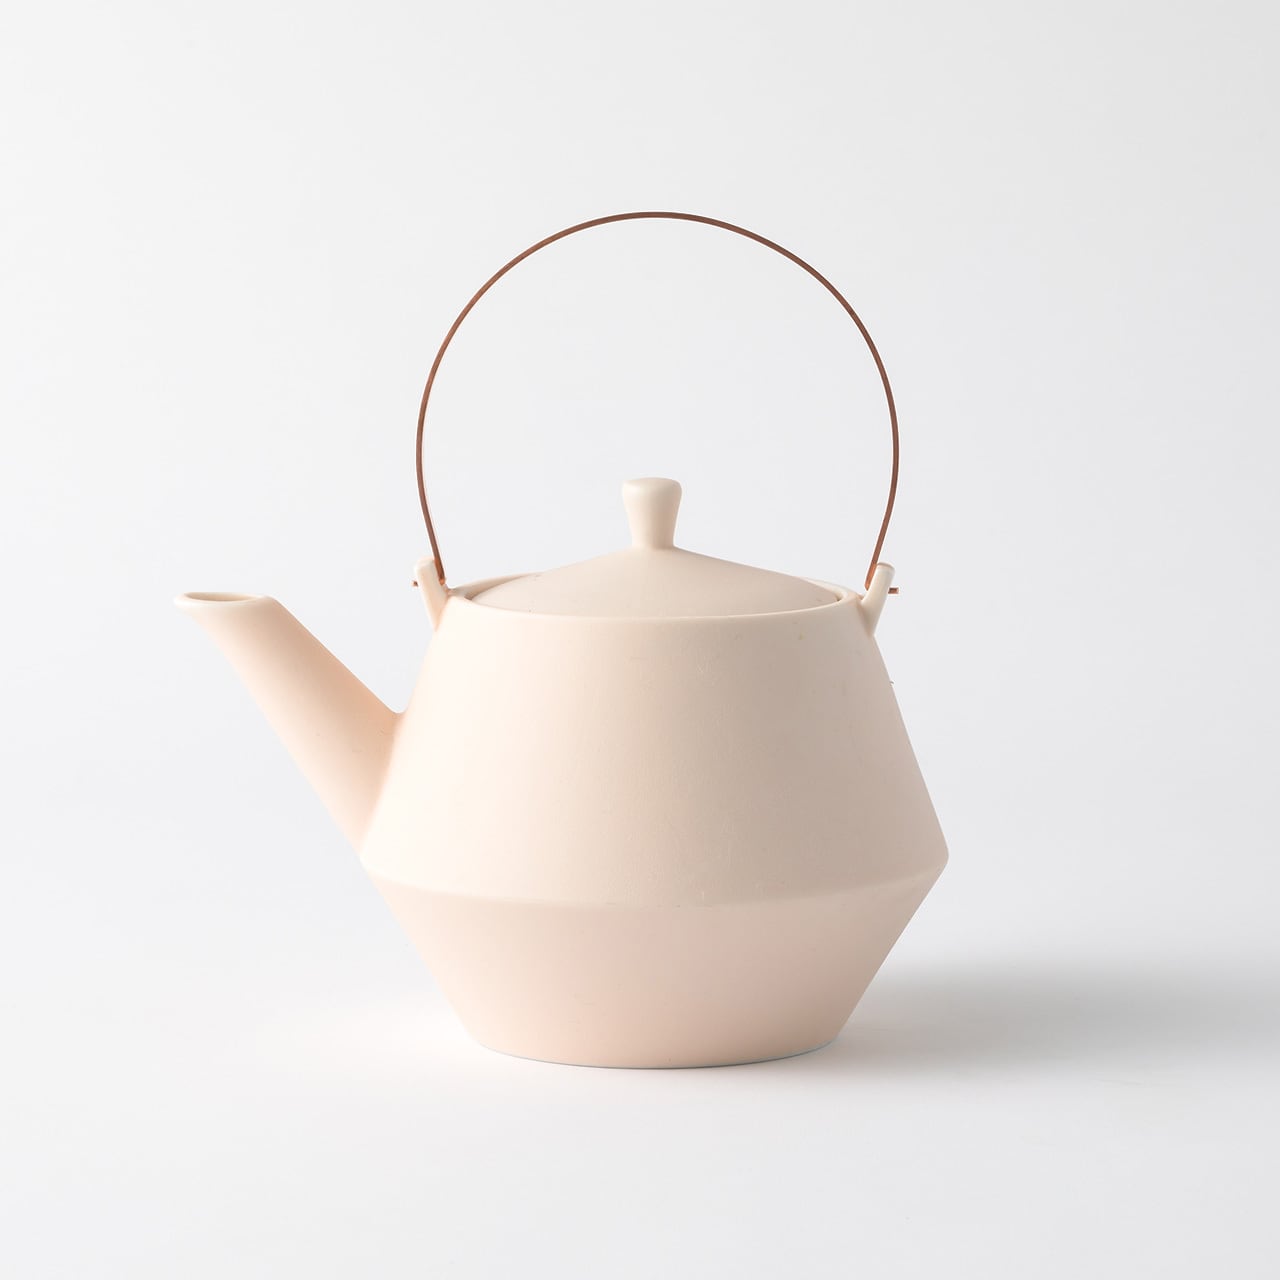 [GIFT SET] Frustum clay pot & teacup